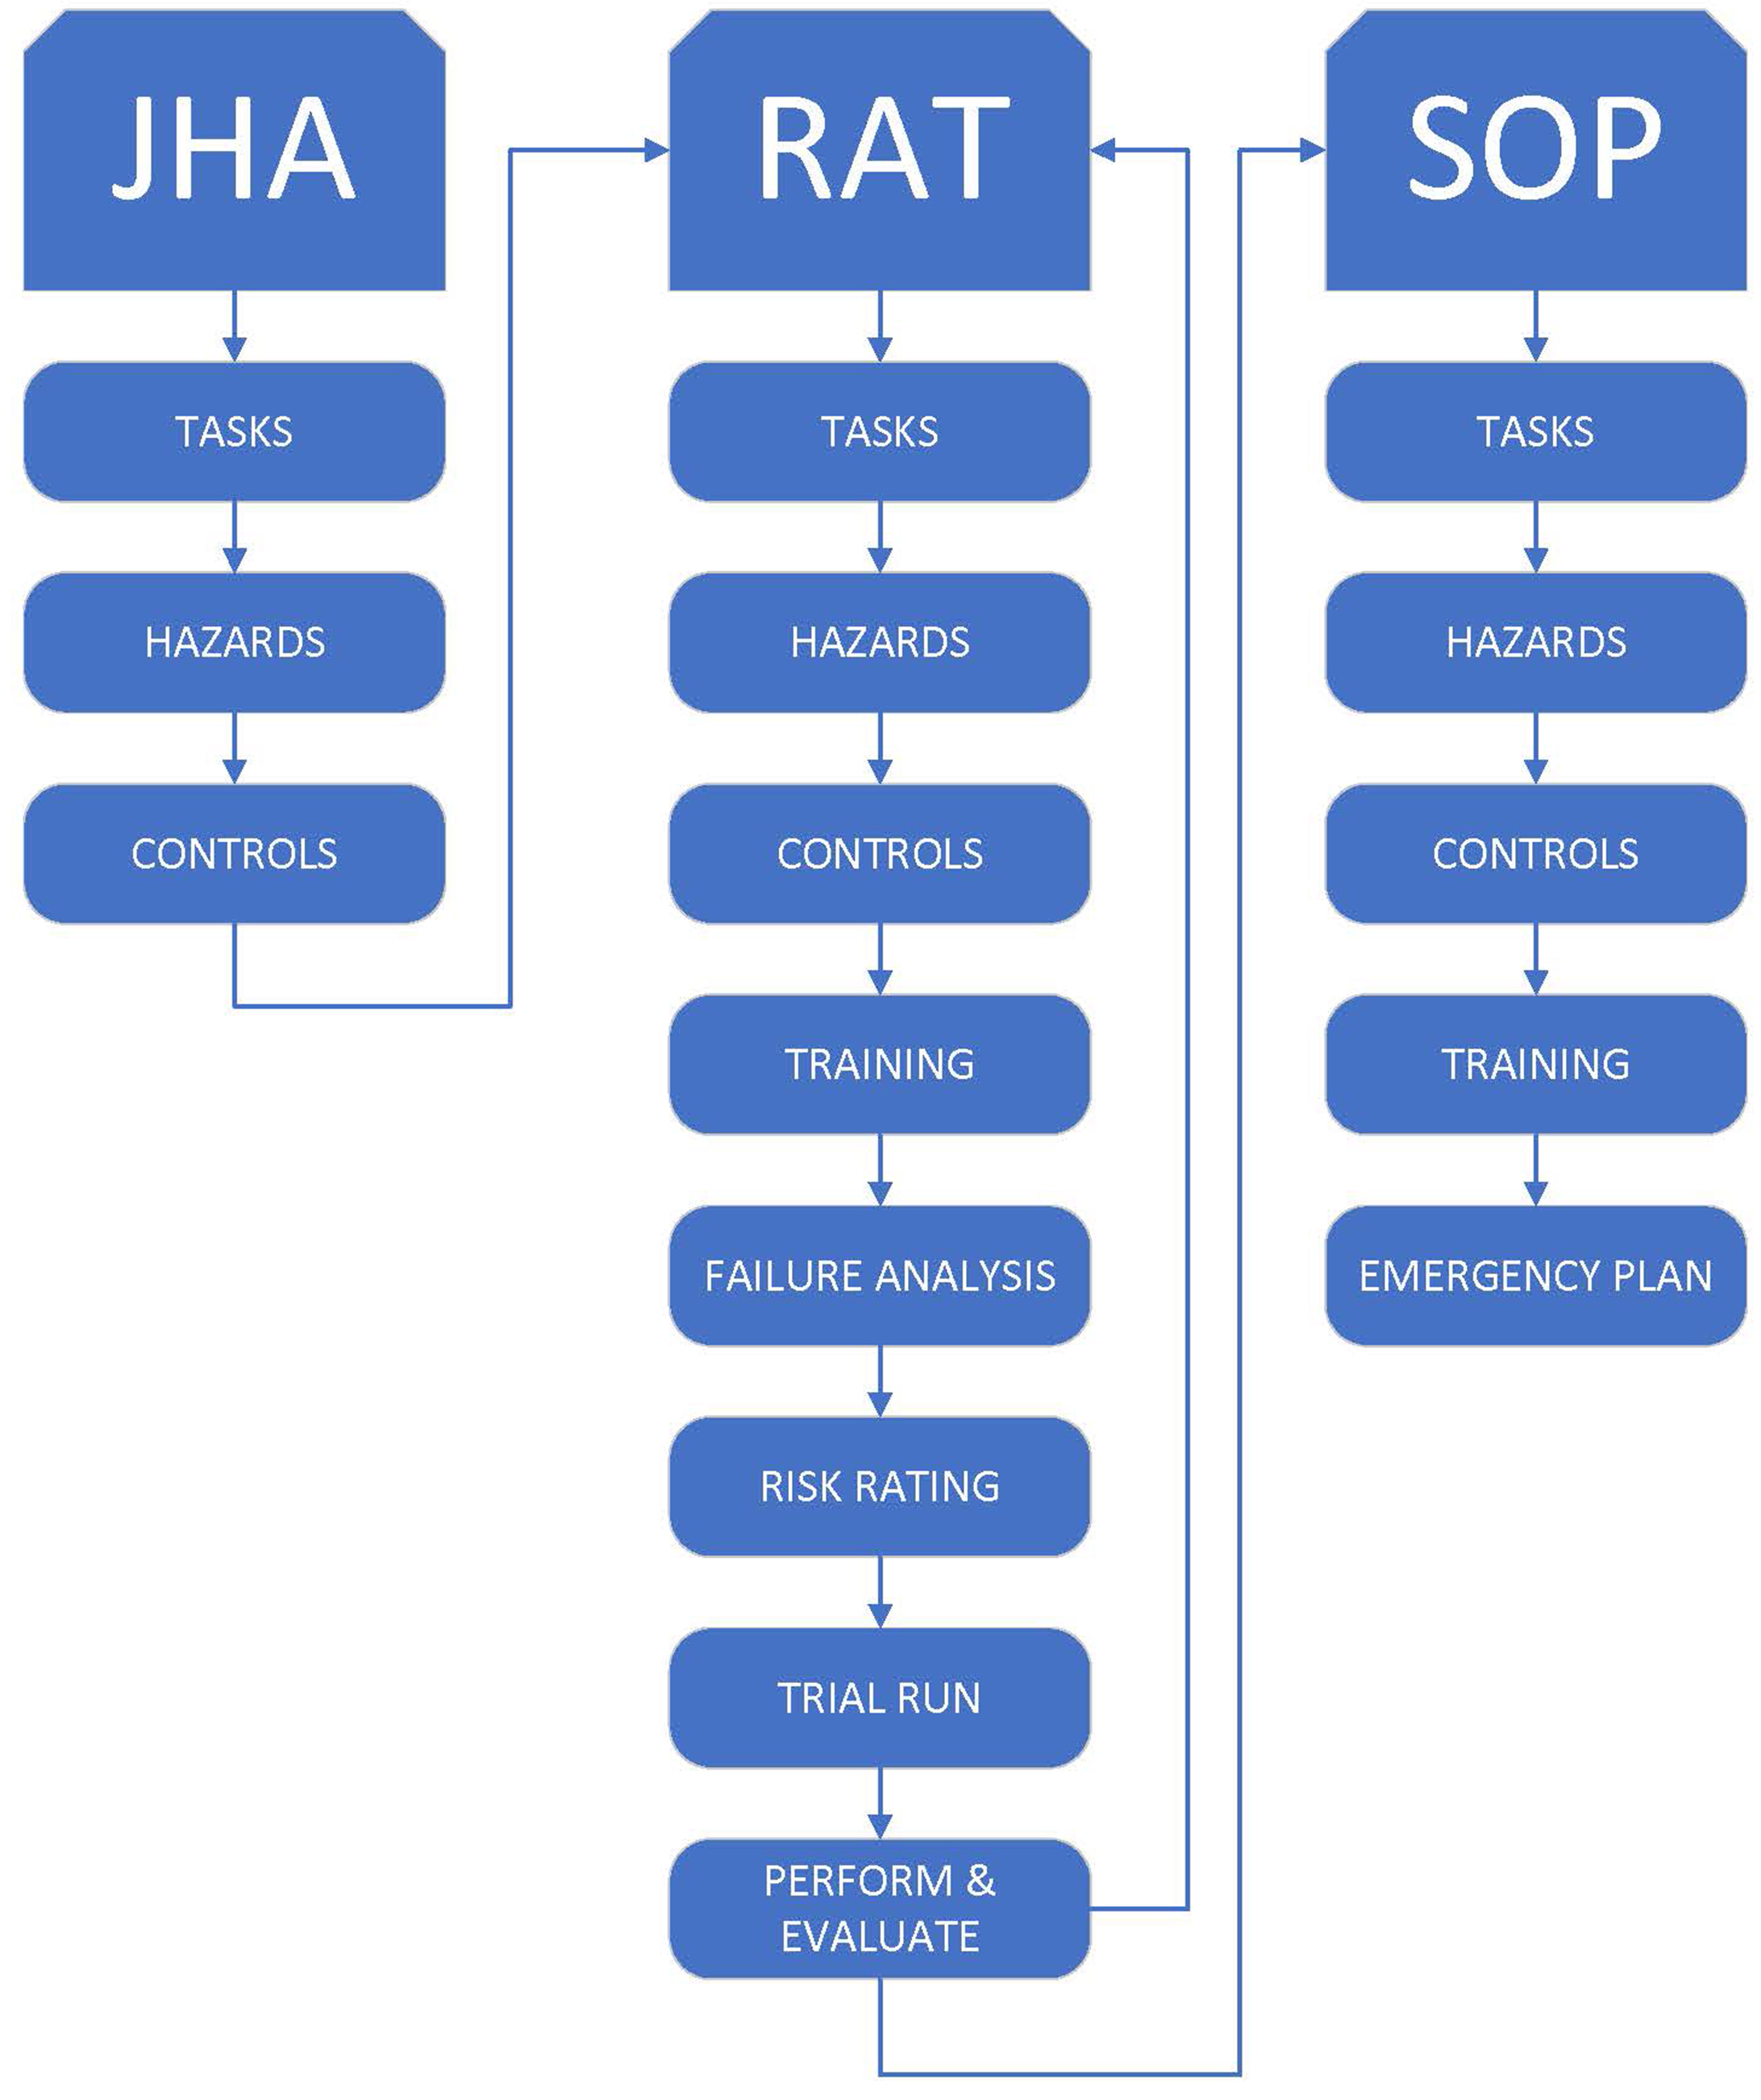 Workflow chart for jha, rat, sop